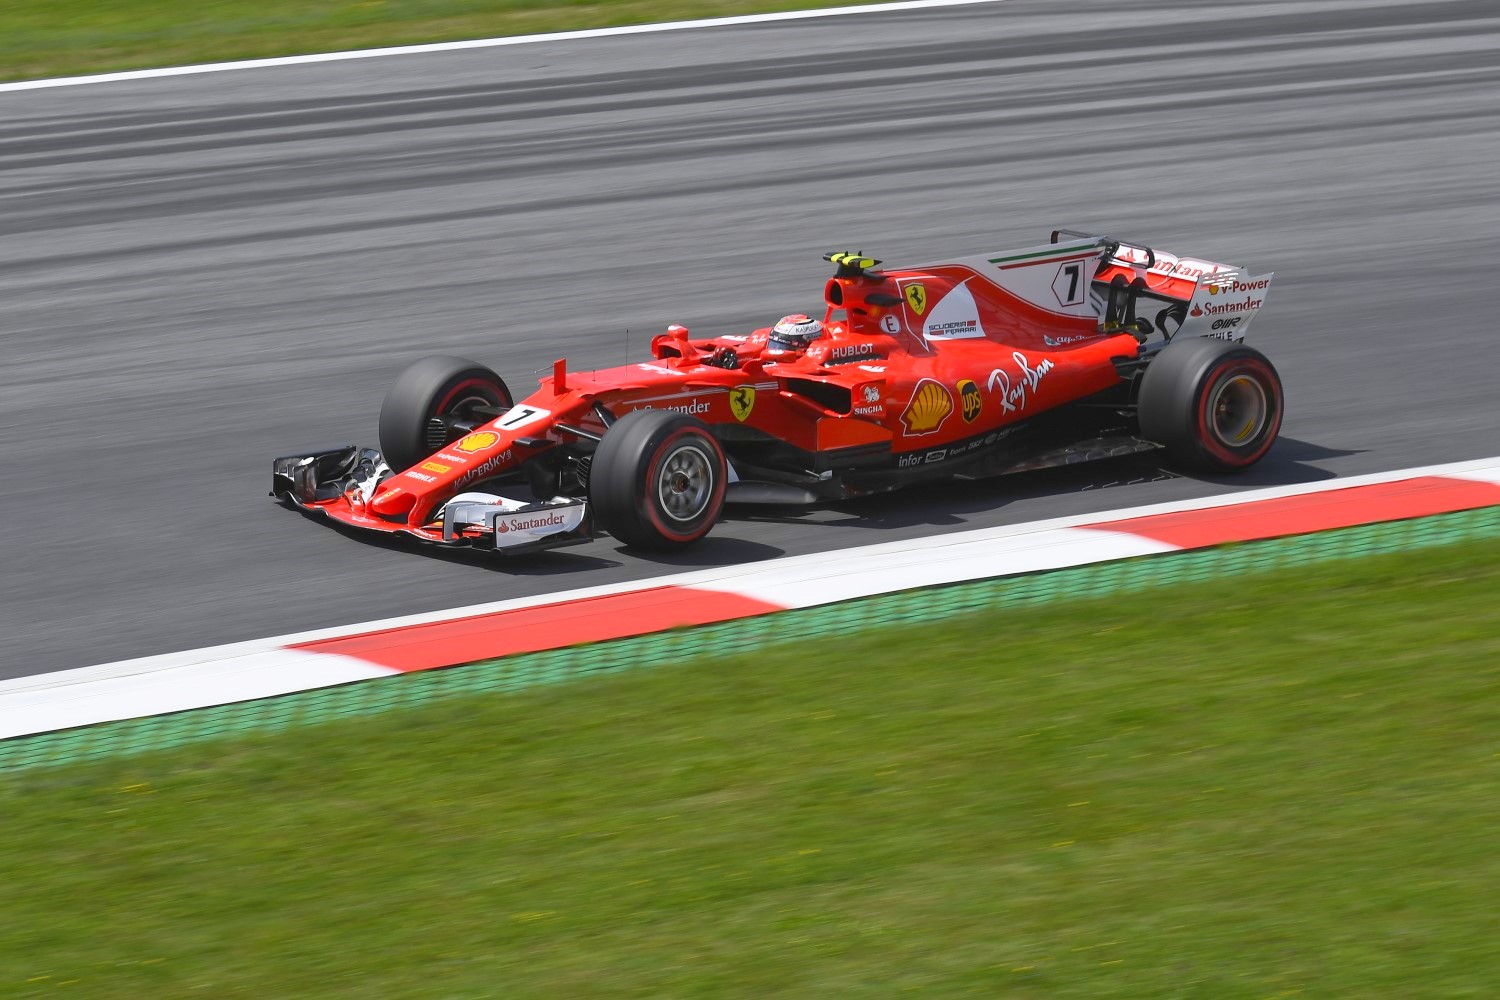 Raikkonen's days at Ferrari appear numbered